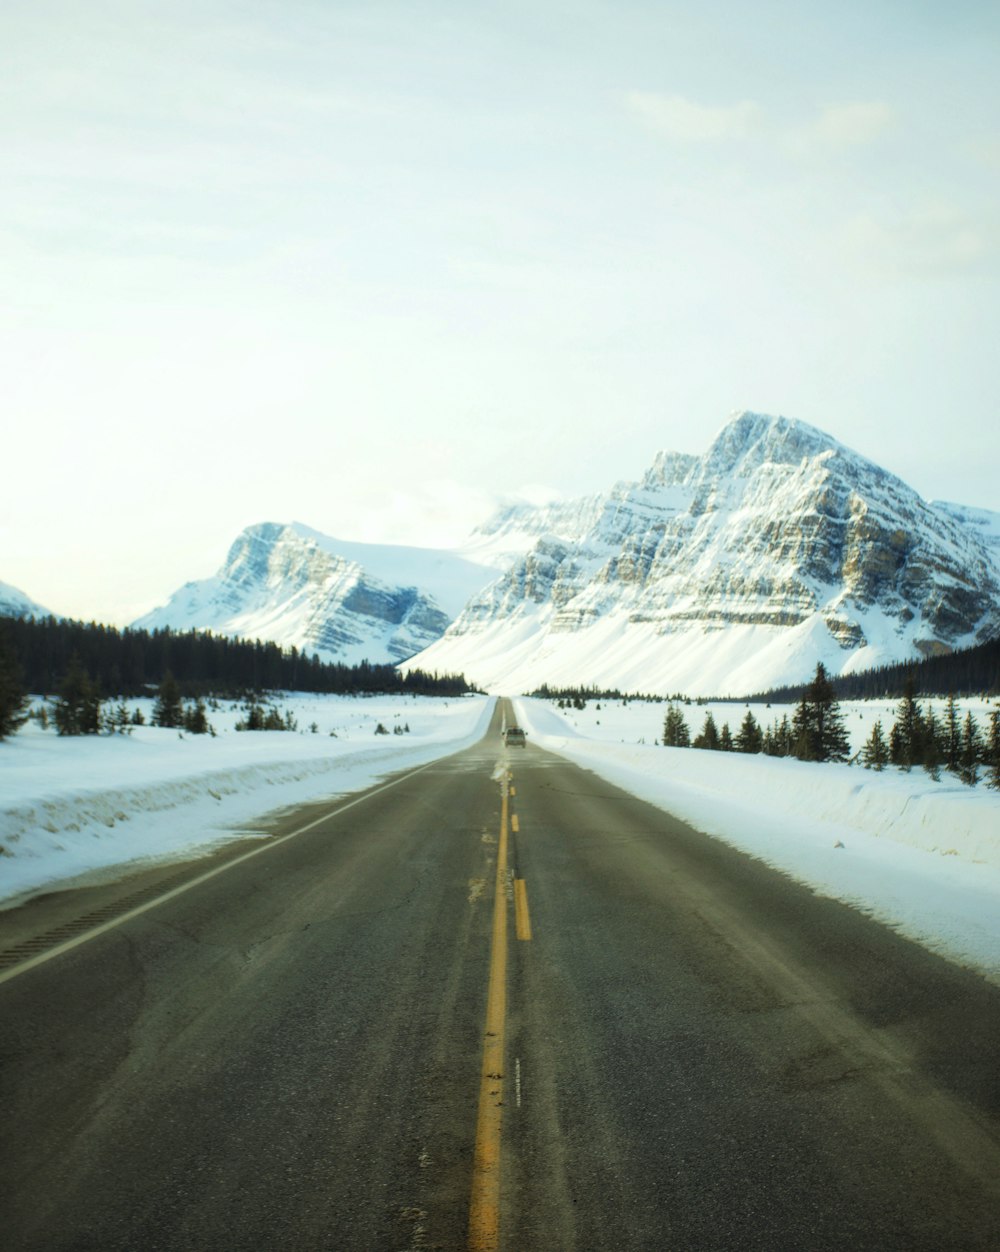 road leading towards snowy mountain